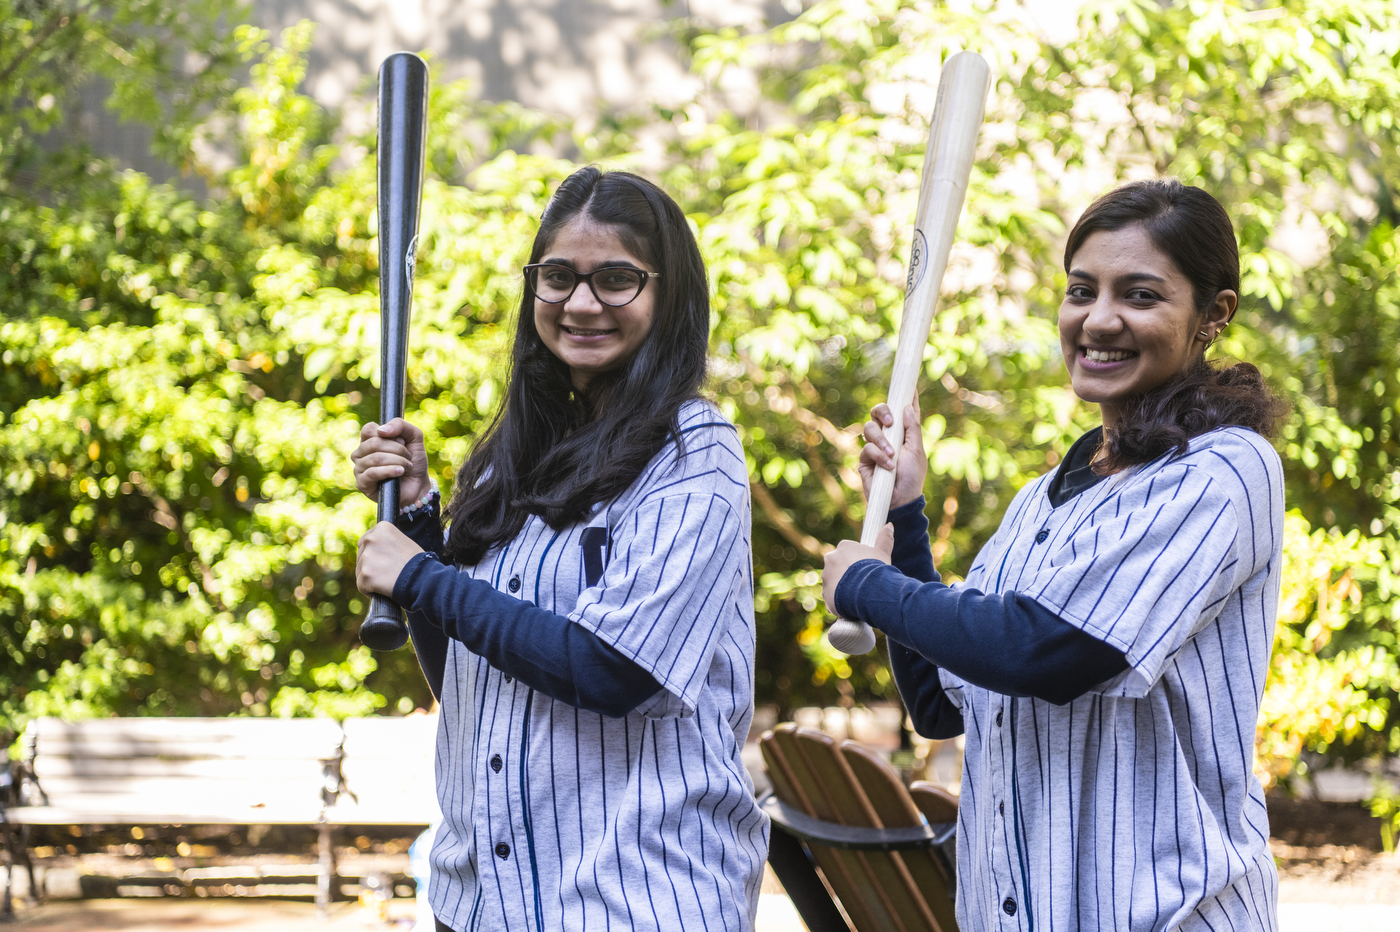 Students holding baseball bats and smiling